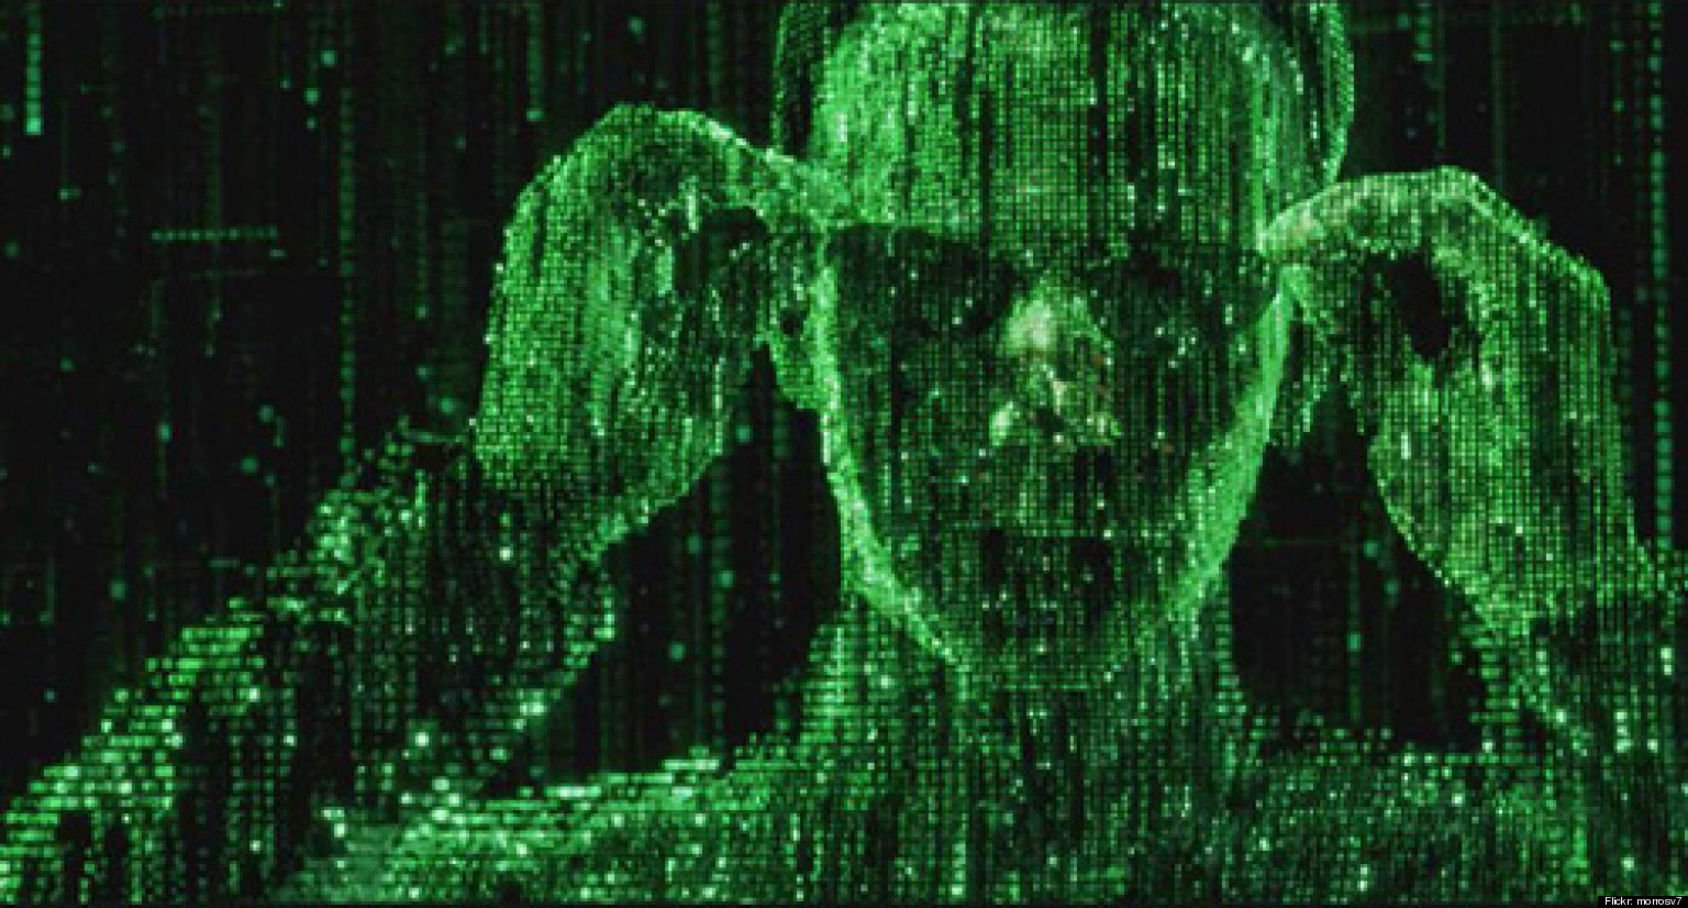 matrix, Sci fi, Science, Fiction, Action, Fighting, Futuristic, Thriller, Noir, Adventure, Warrior, Hacker, Gacking, Hack, Computer, Binary, Code, Reloaded, Revolutions, Cyberpunk, Cyber, Punk, Technics, Virus Wallpaper